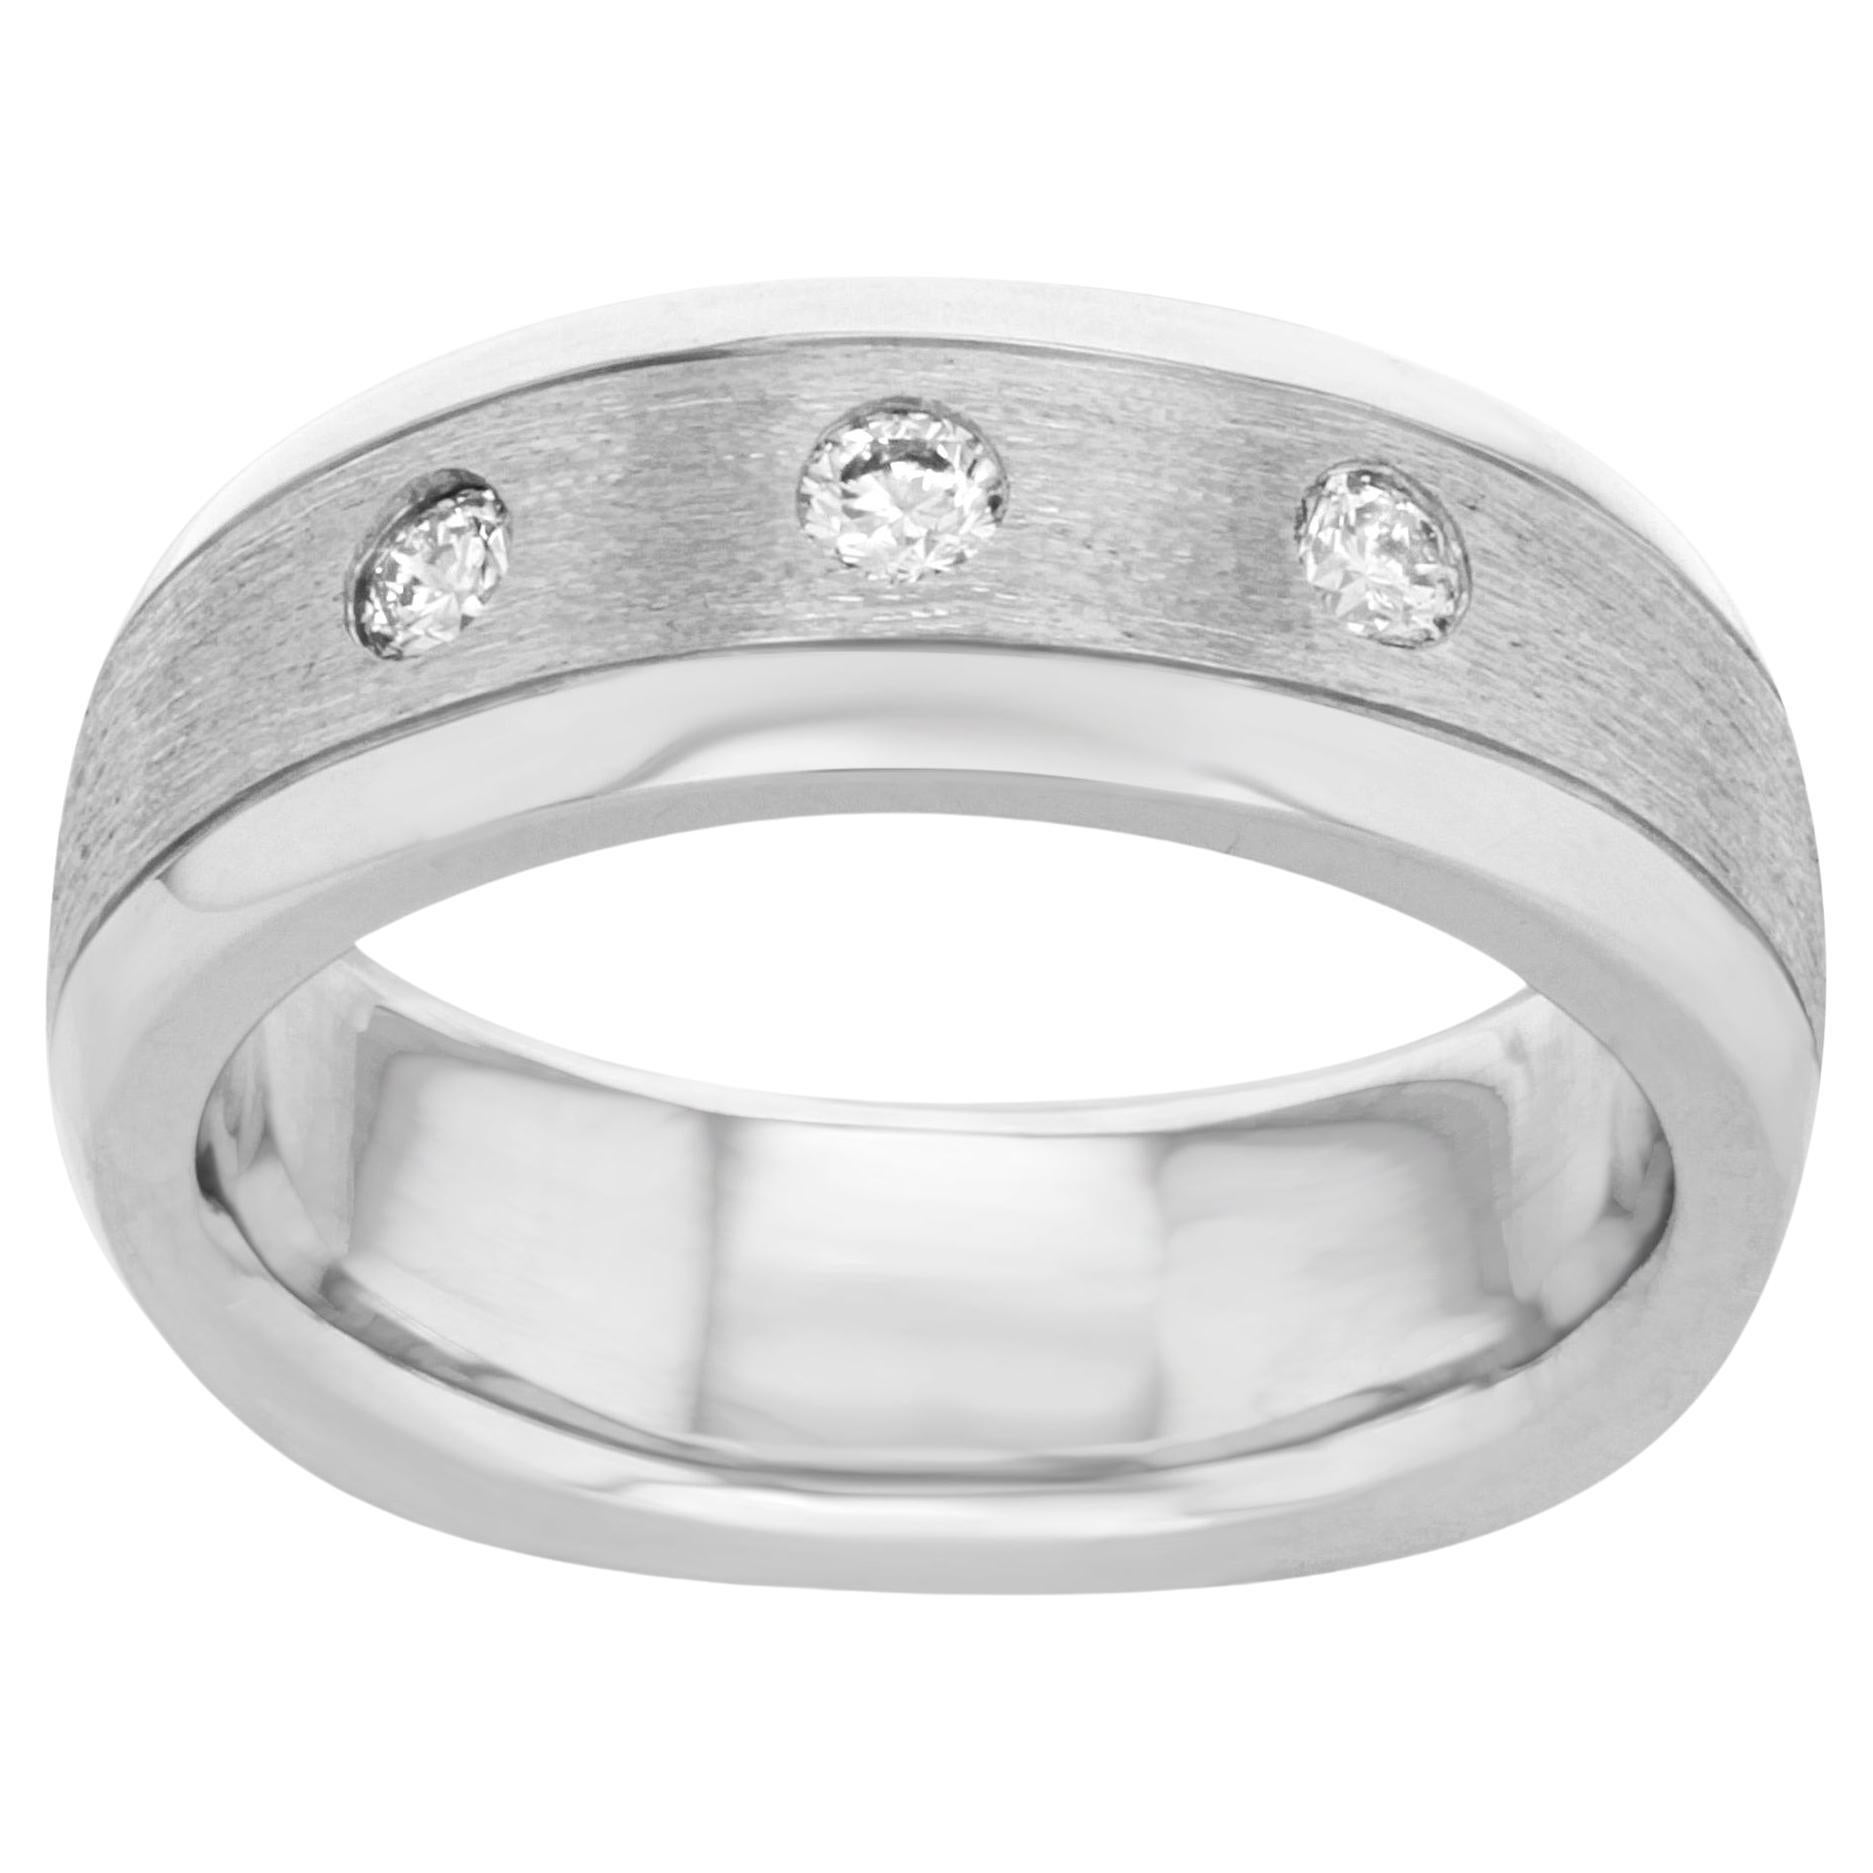 Rachel Koen Three Stone Diamond Wedding Band 14K White Gold 0.28 Cttw For Sale